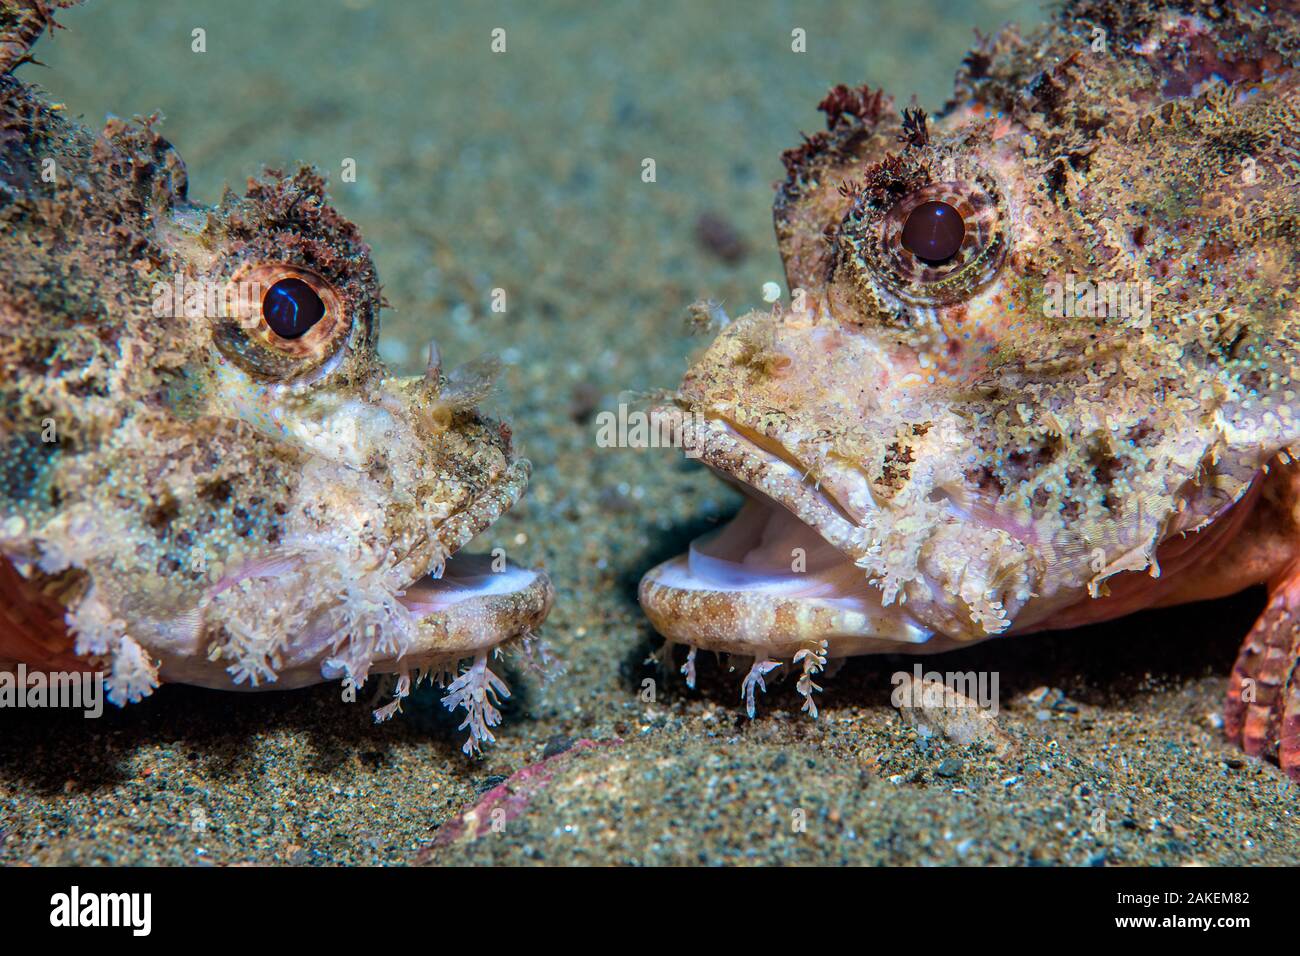 Raggy scorpionfish (Scorpaenopsis venosa) Anfechtung Gebiet. Ambon Bay, Ambon, Maluku Archipel, Indonesien. Banda See, tropische West Pazifik. Stockfoto